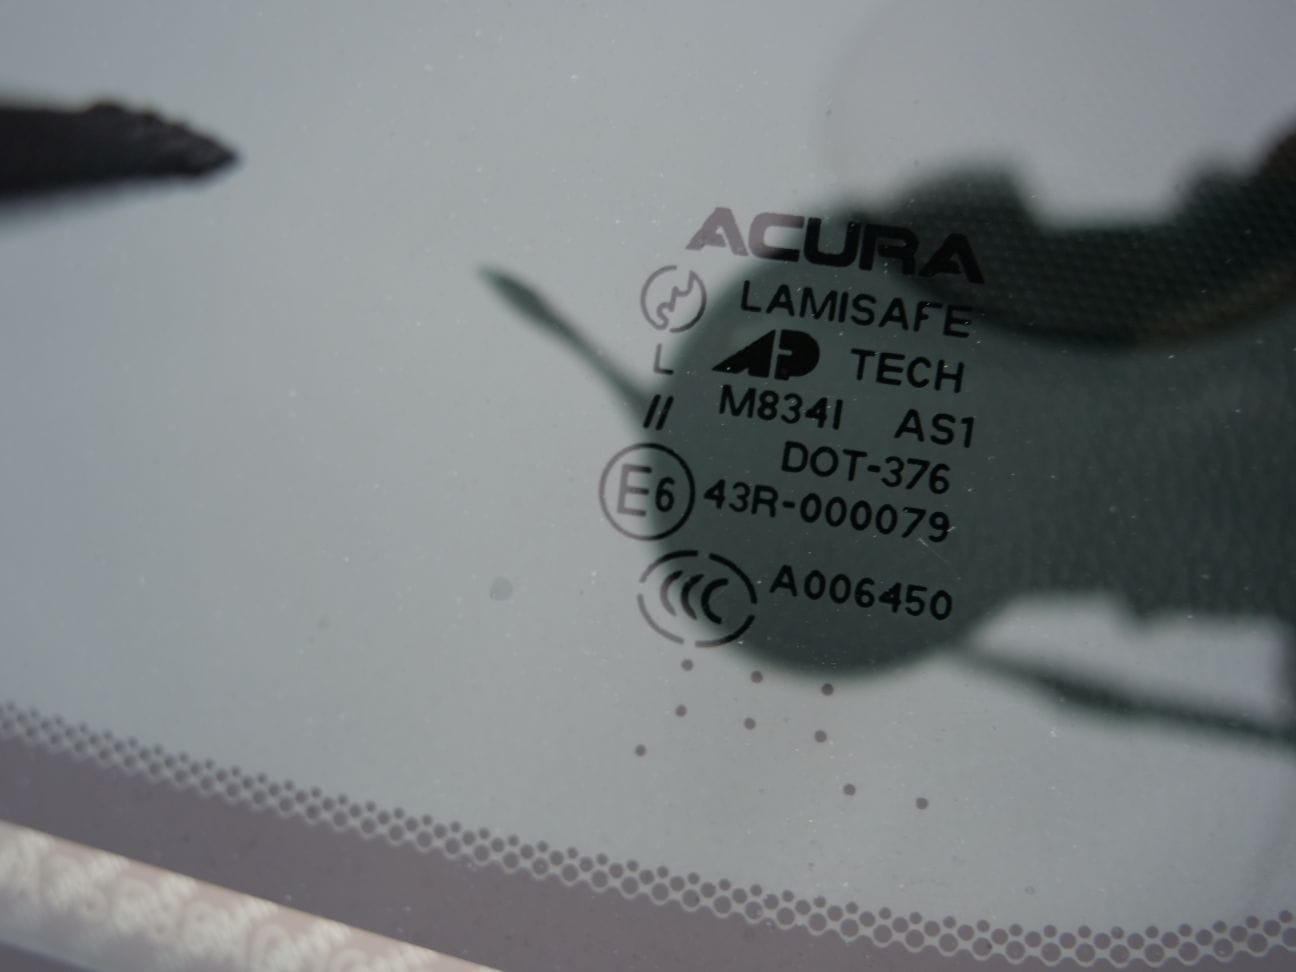 2008 Acura TL - FS: 2008 Acura TL Type S, 6MT, NBP ext, Silver/Ebony int,  85k... - Used - VIN 19UUA75588A009063 - 85,500 Miles - 6 cyl - 2WD - Manual - Sedan - Black - Torrance, CA 90503, United States